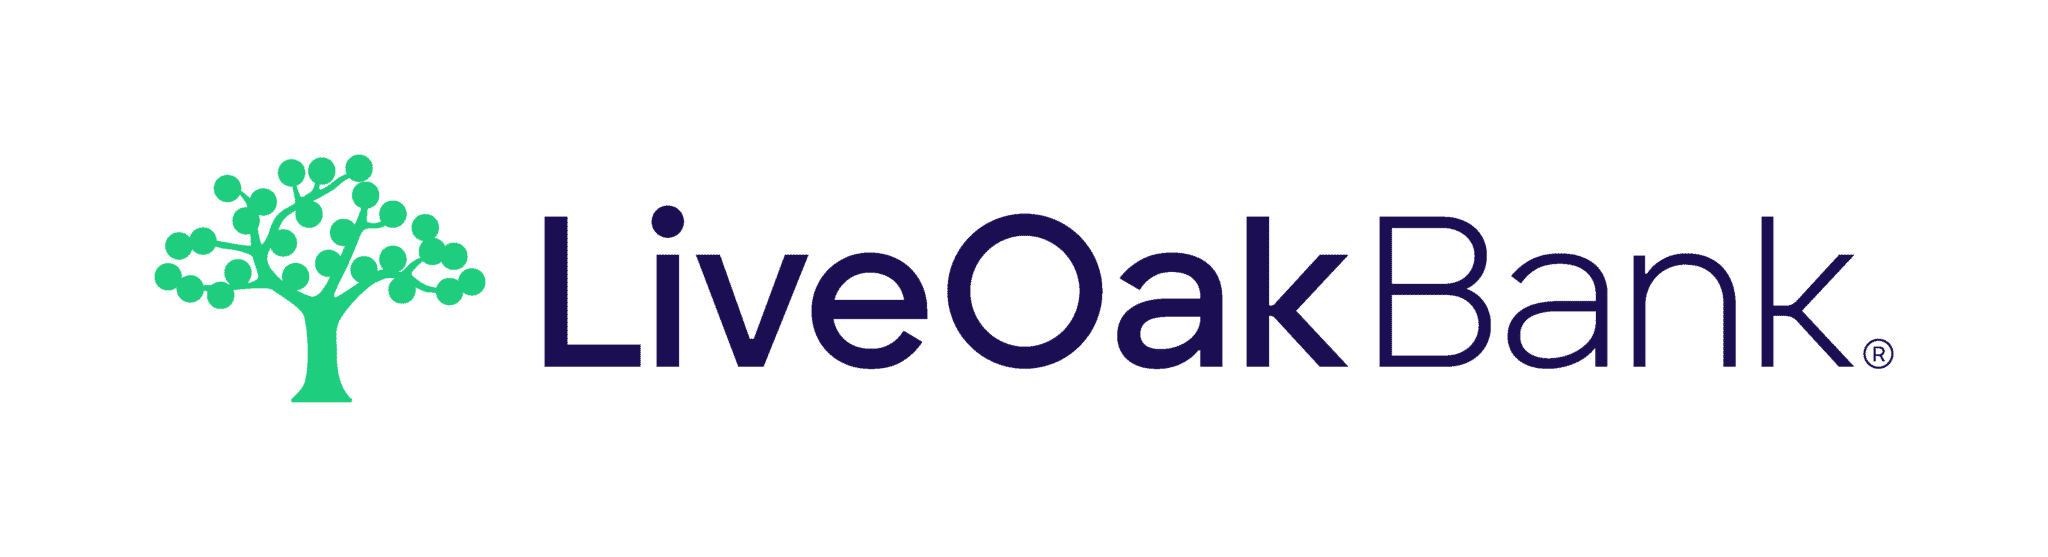 Live Oak Bank 3-month CD